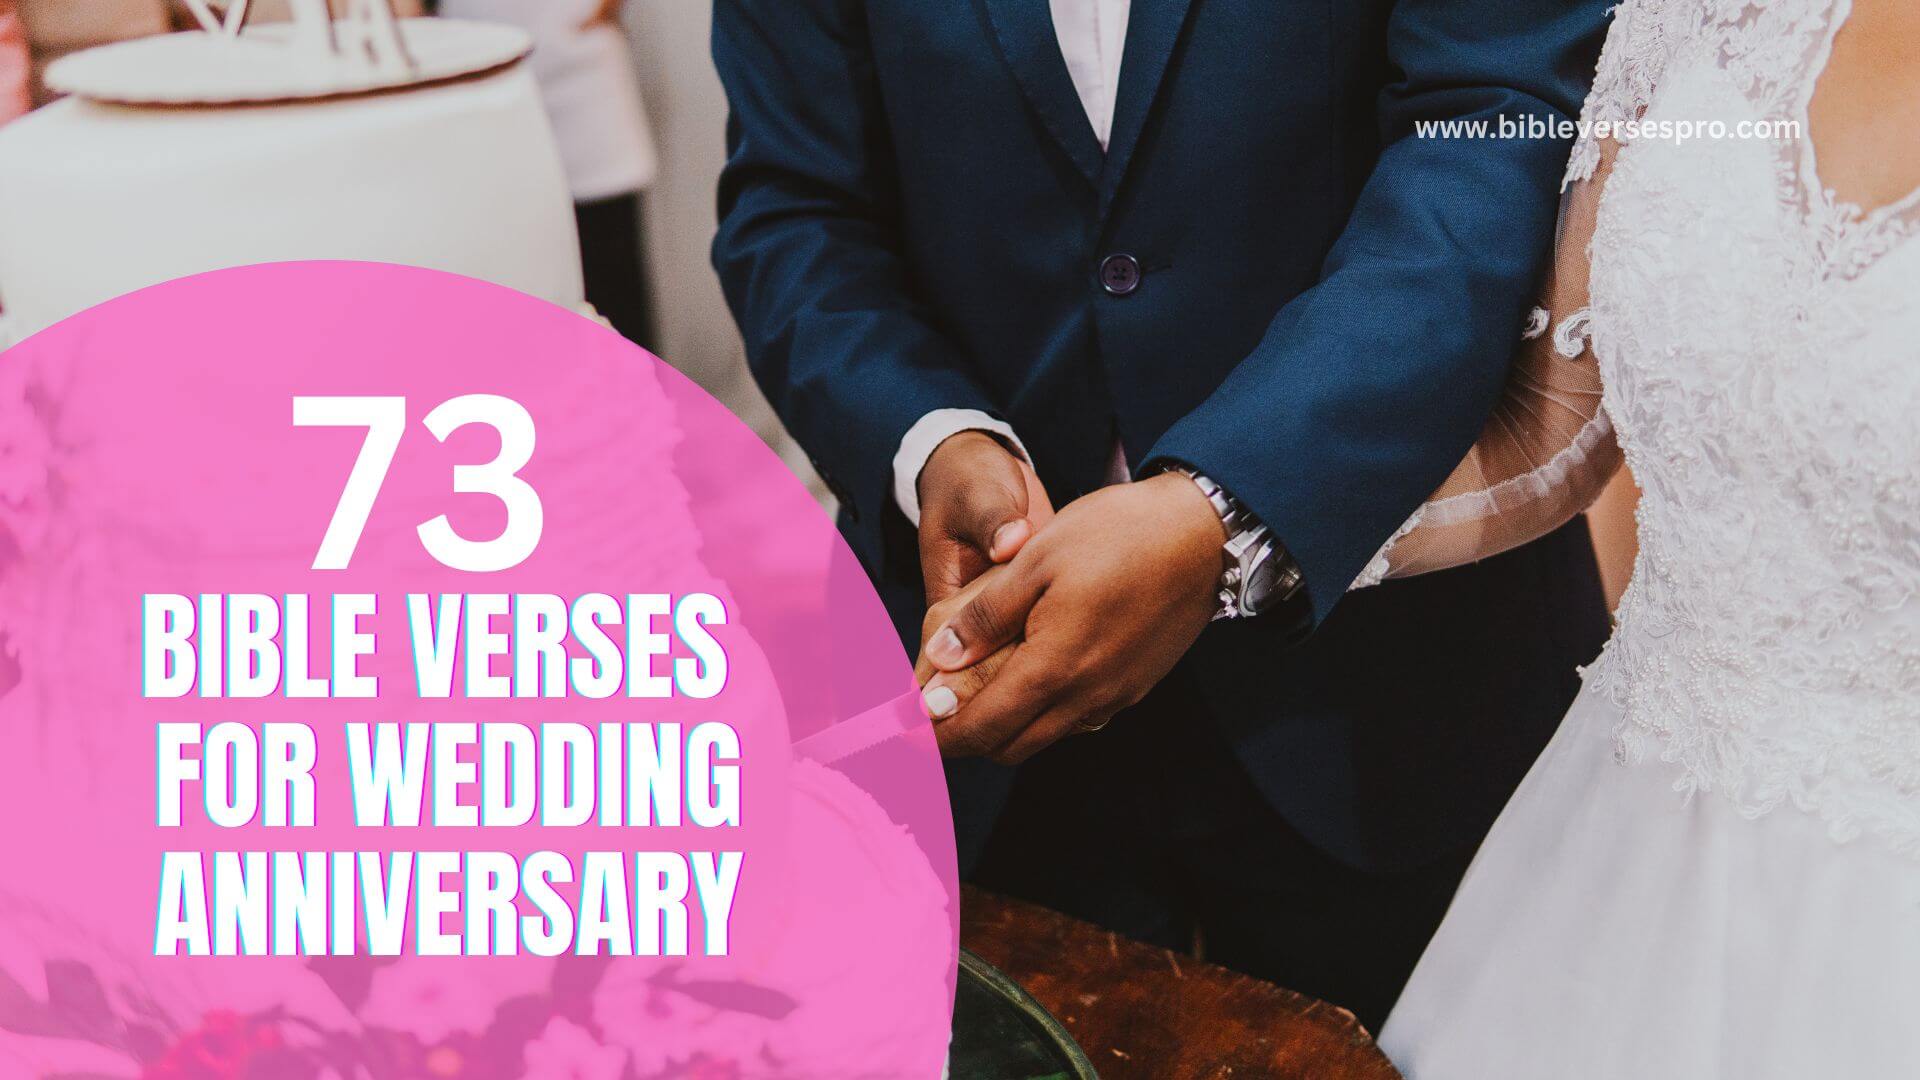 BIBLE VERSES FOR WEDDING ANNIVERSARY (1)